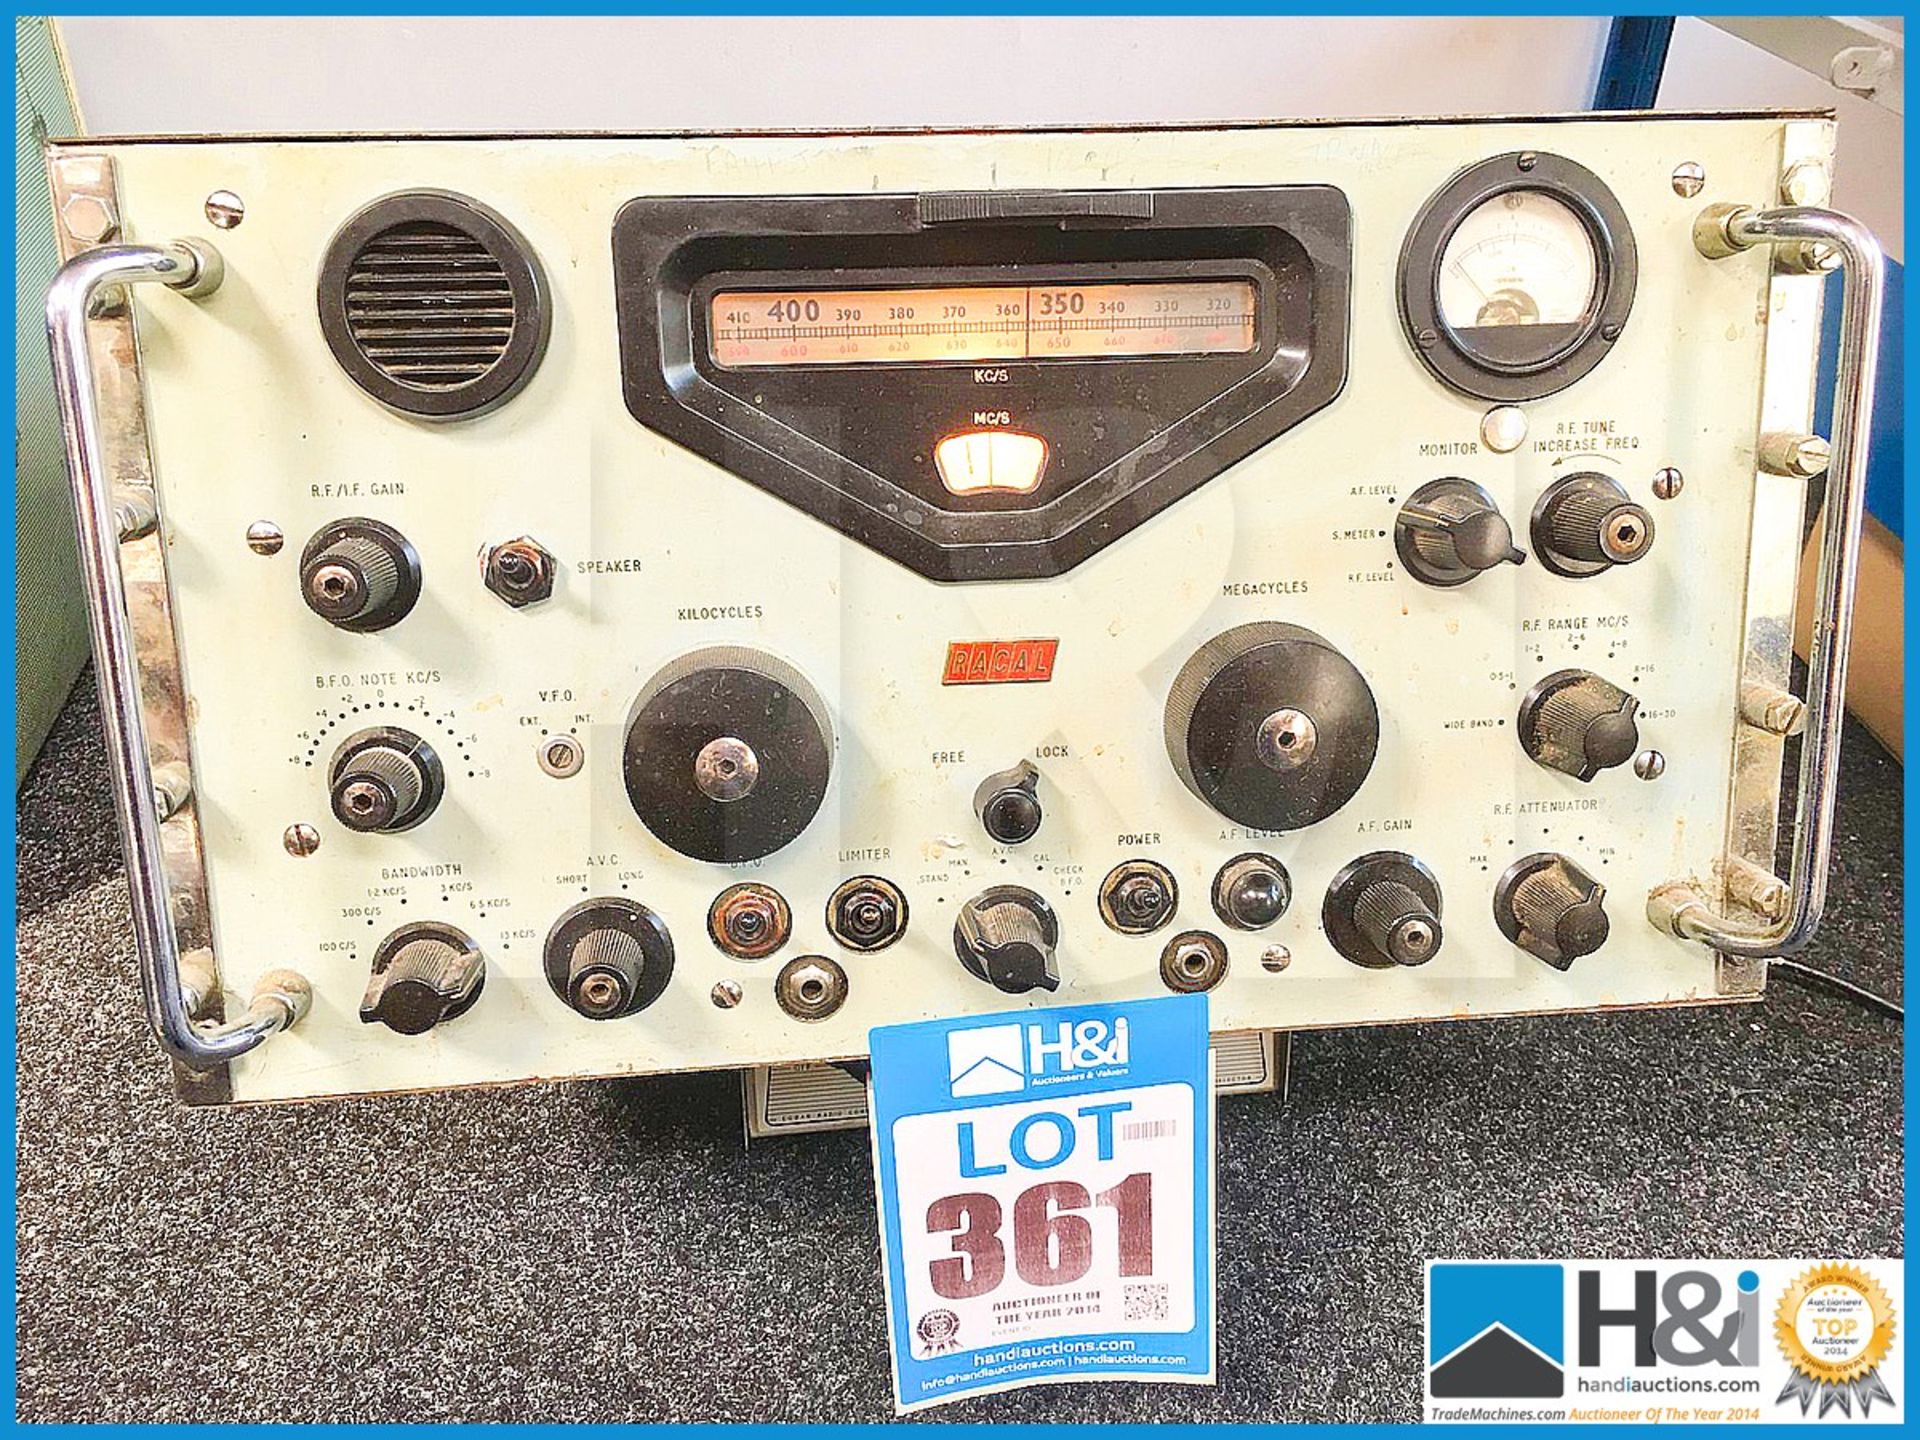 Vintage Racal radio receiver. - Image 2 of 4